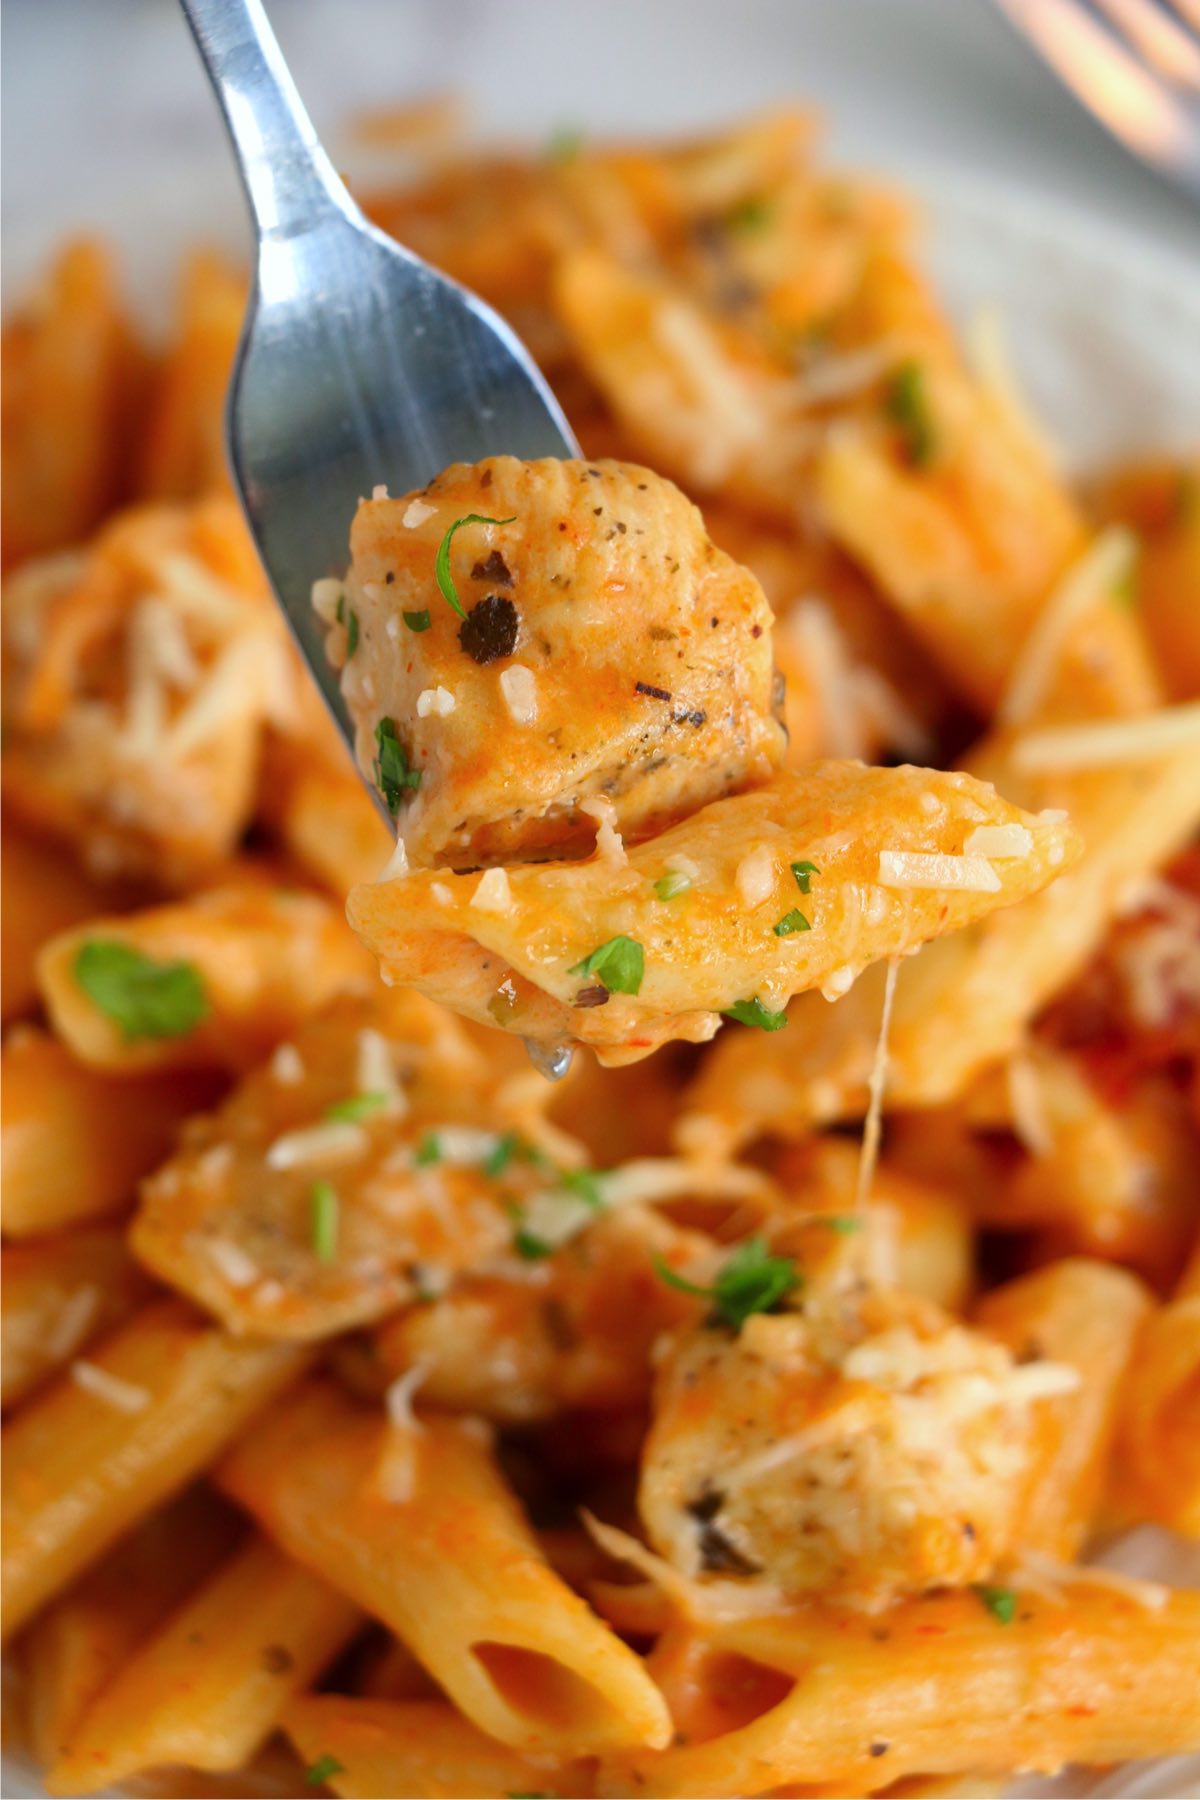 Closeup shot of forkful of Instant Pot chicken parmesan pasta